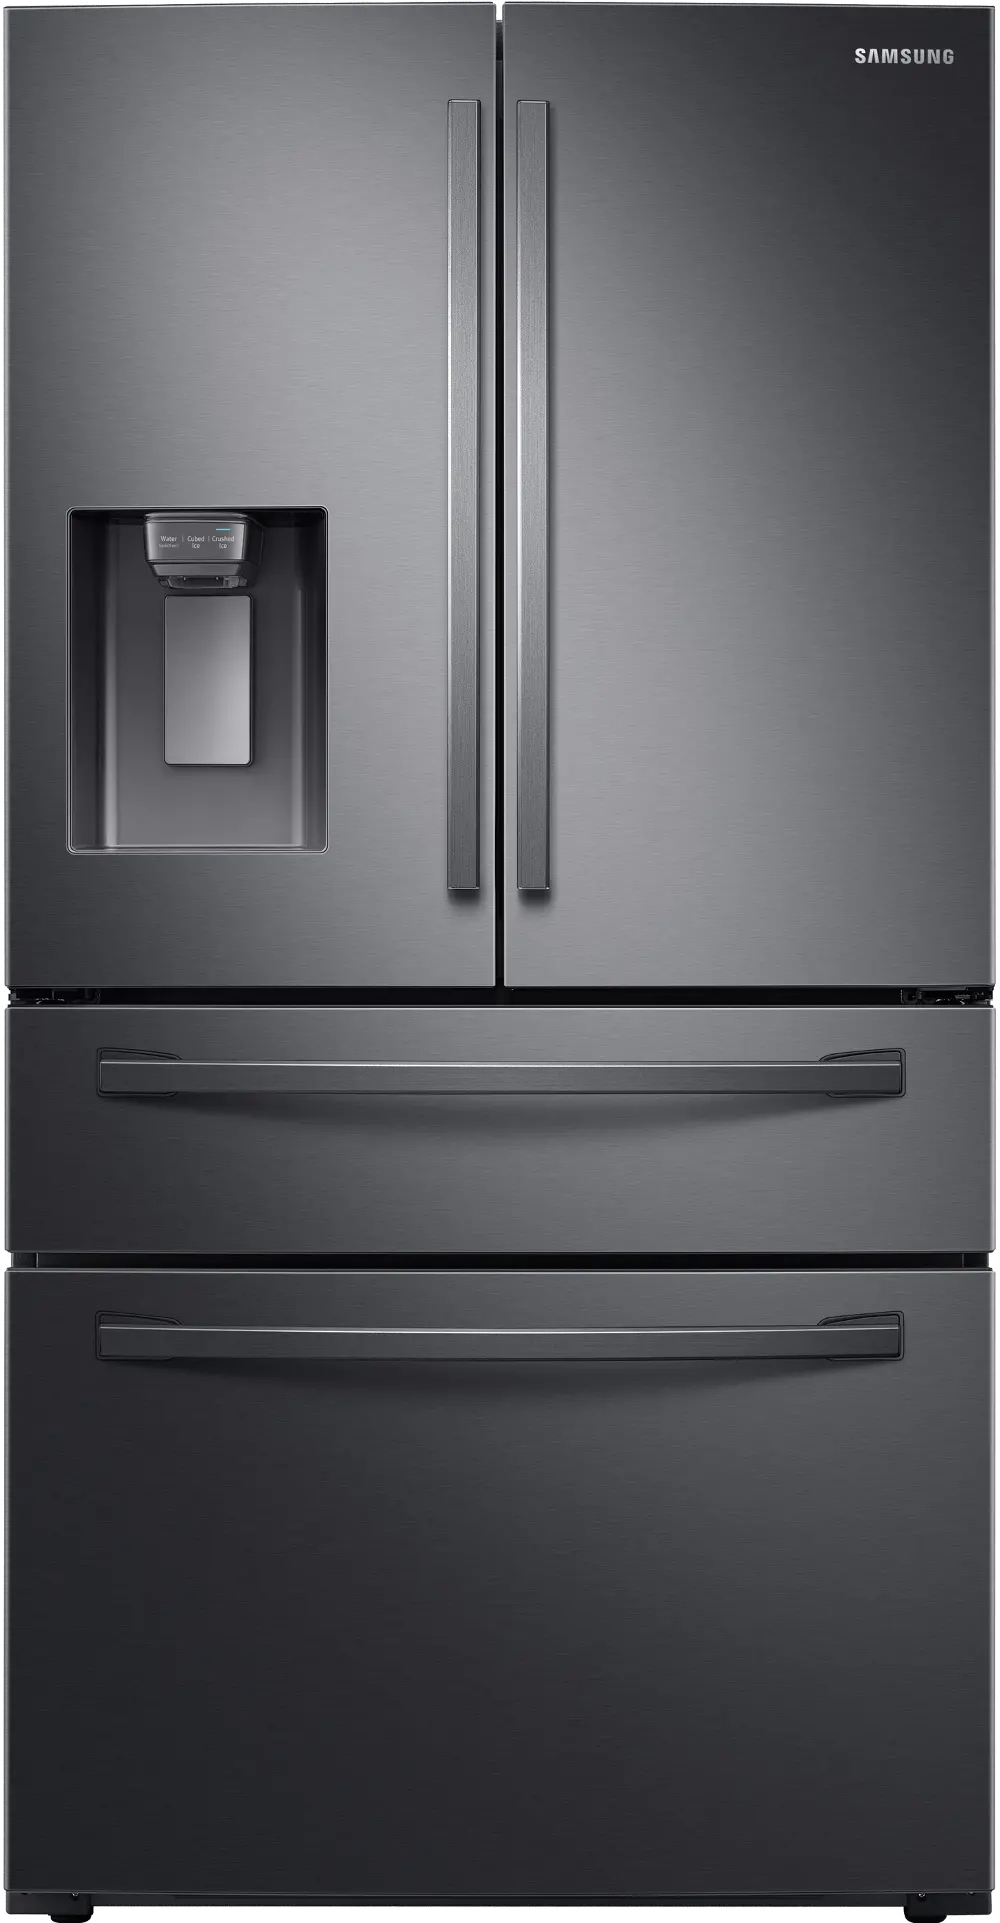 RF24R7201SG Samsung 22.6 cu ft 4 Door Refrigerator - Counter Depth Black Stainless Steel-1